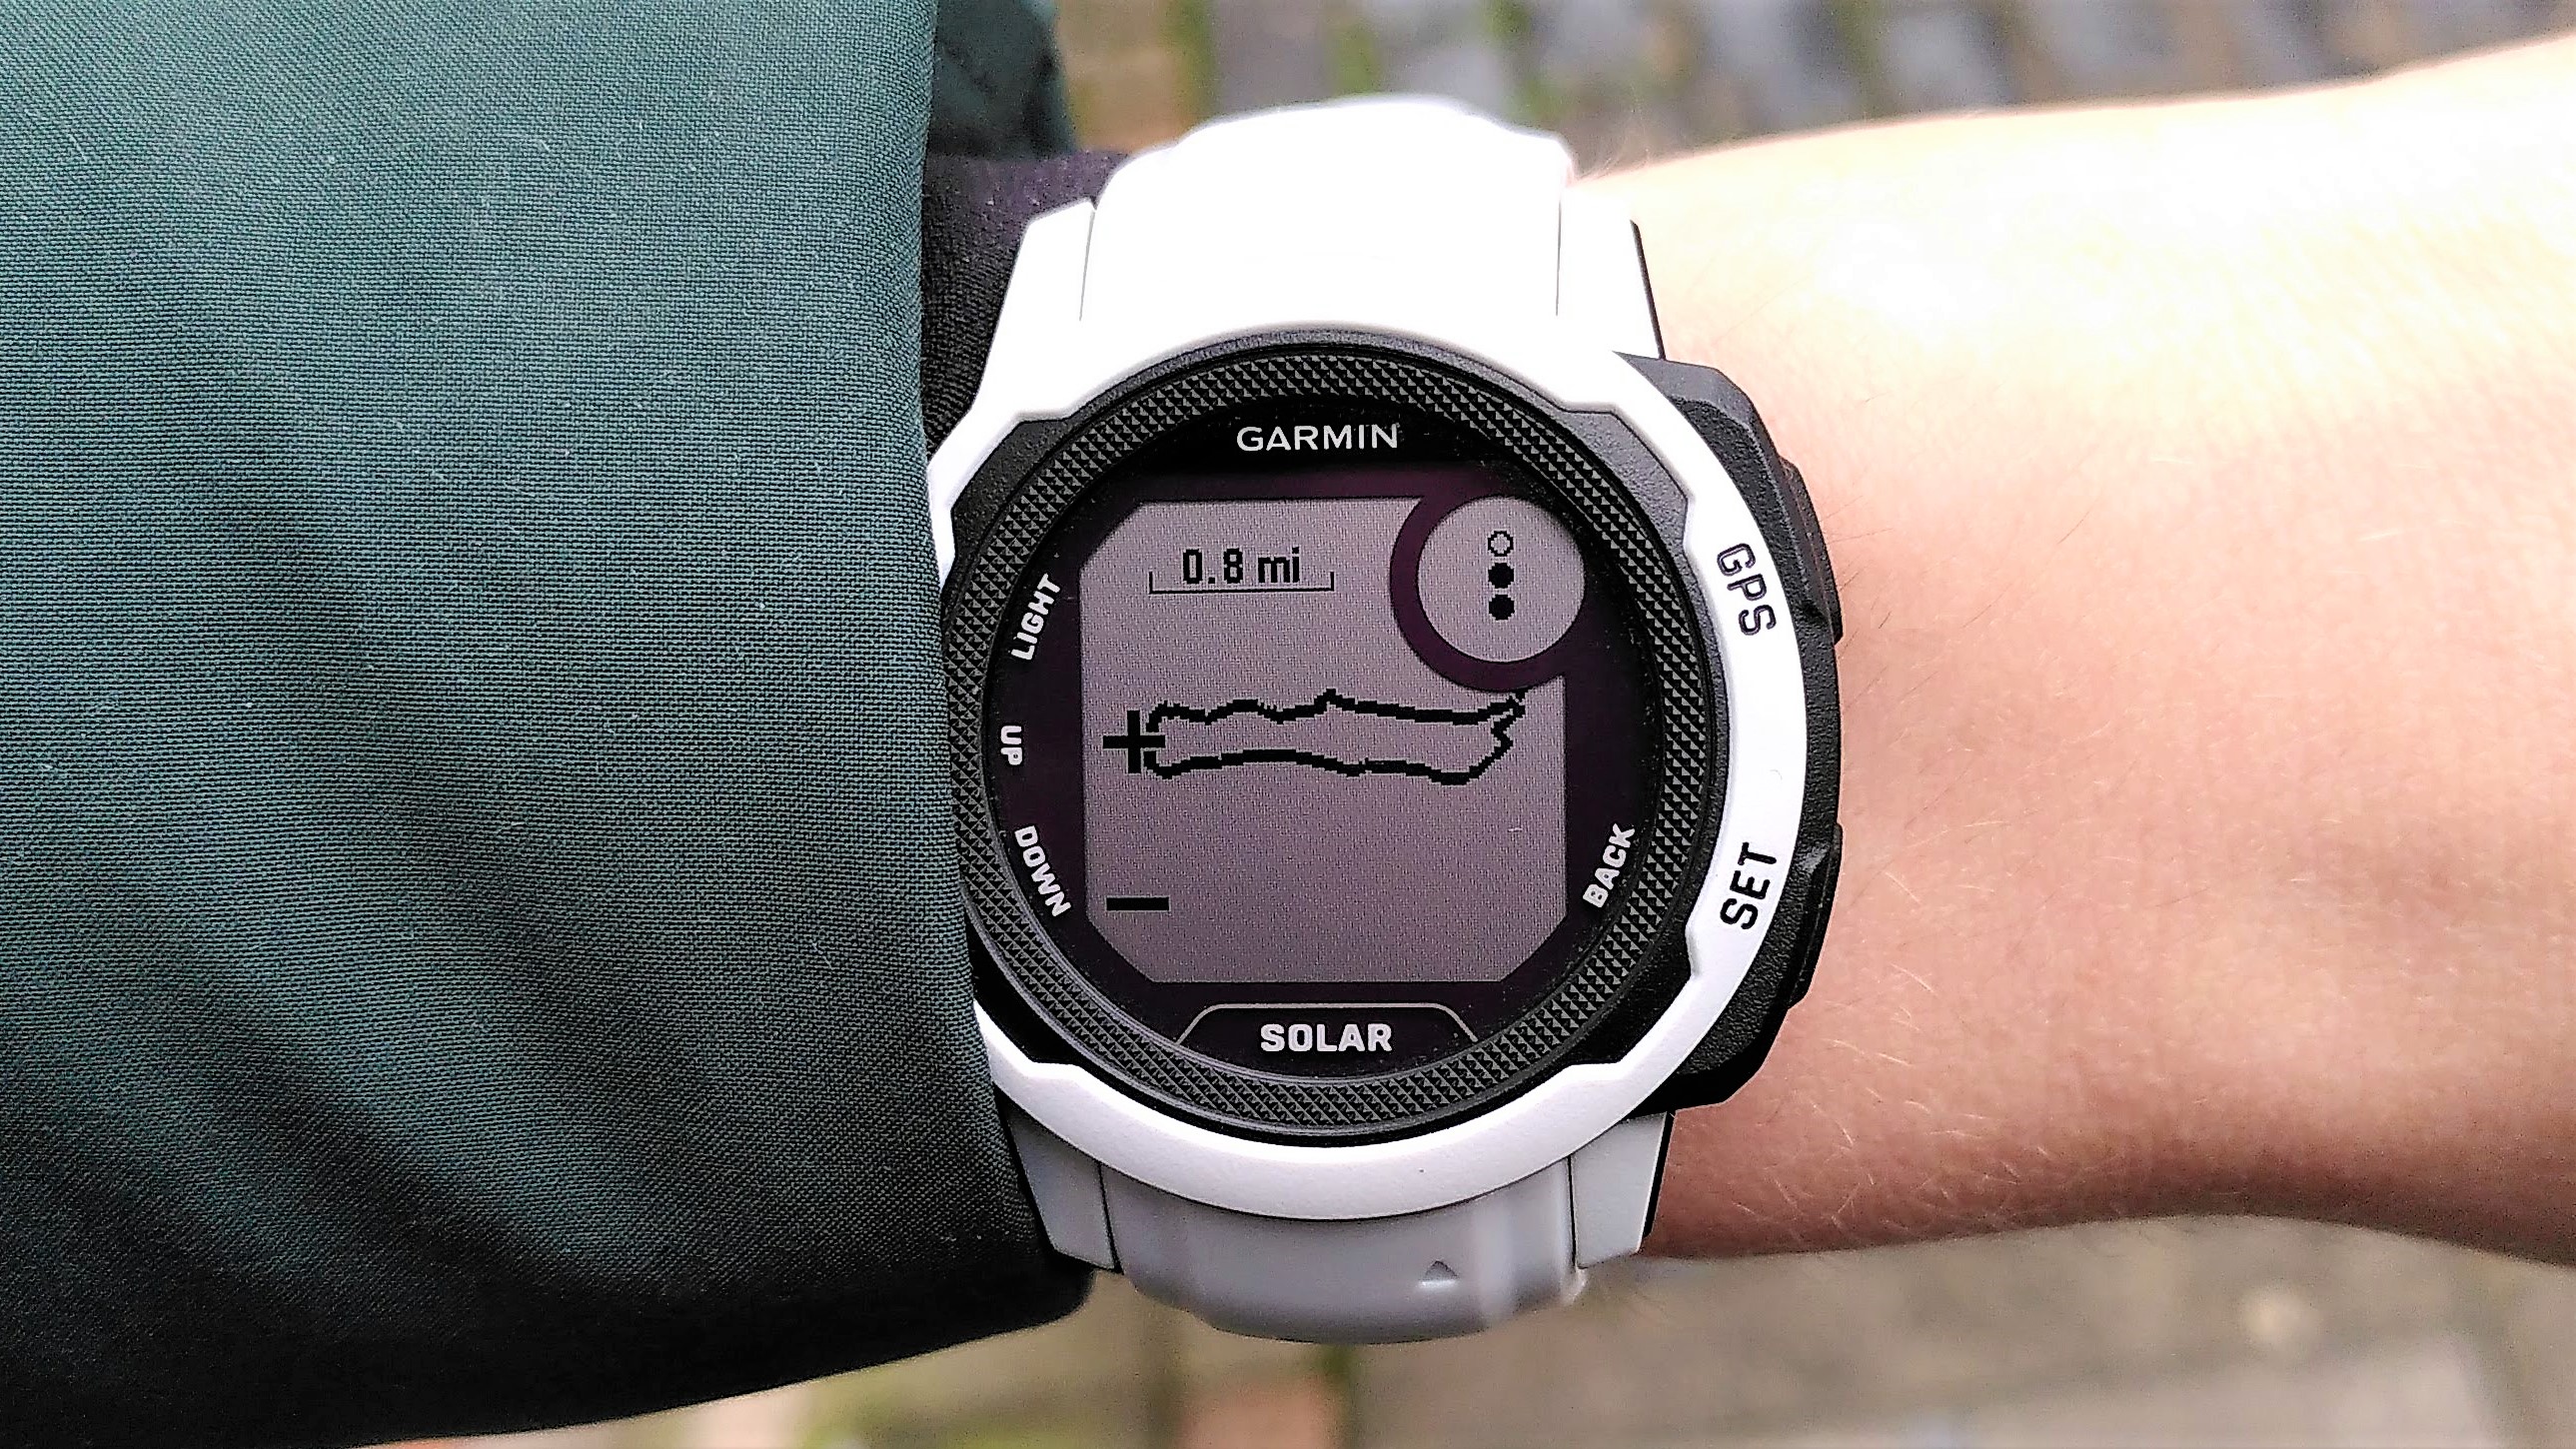 Garmin Forerunner 265 smartwatch could launch soon following FCC